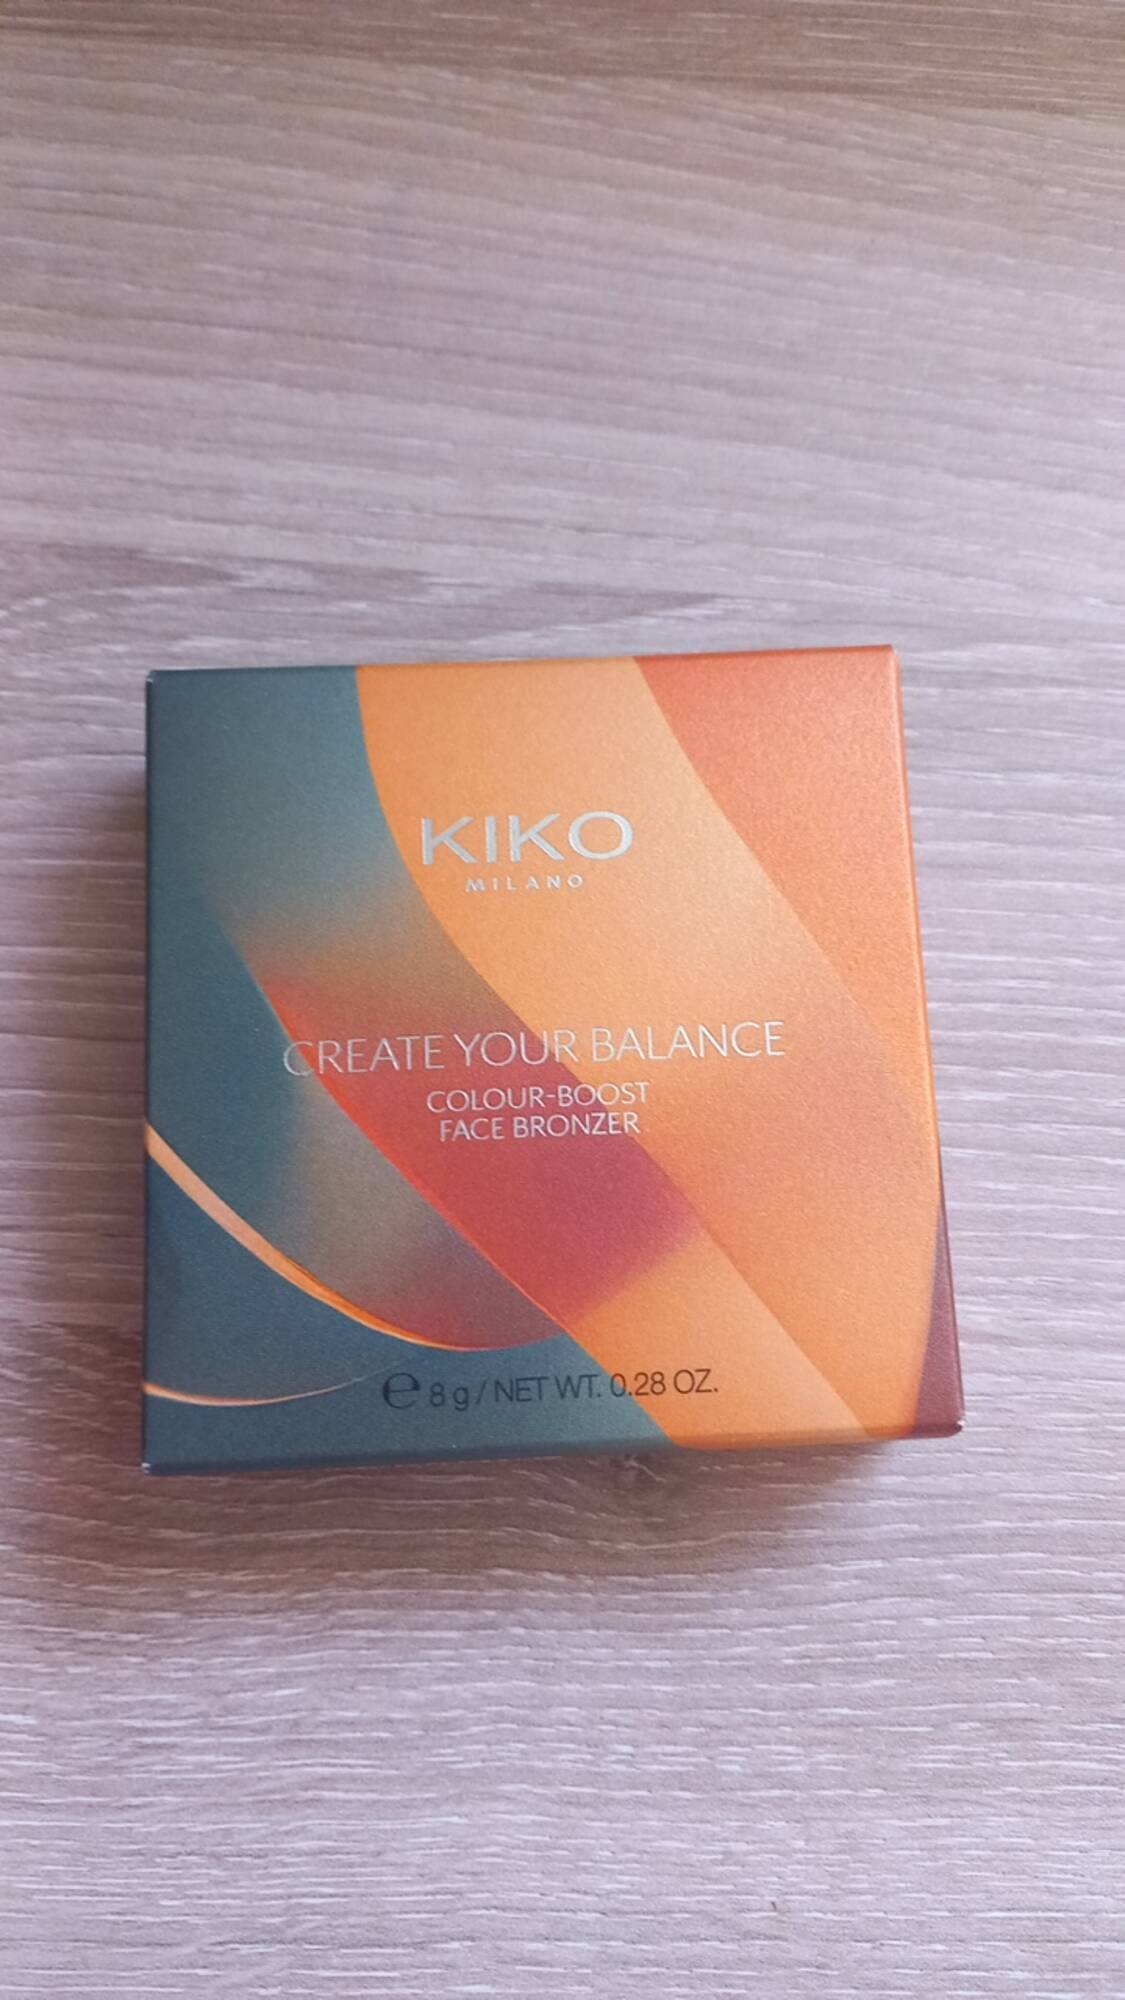 KIKO - Create your balance